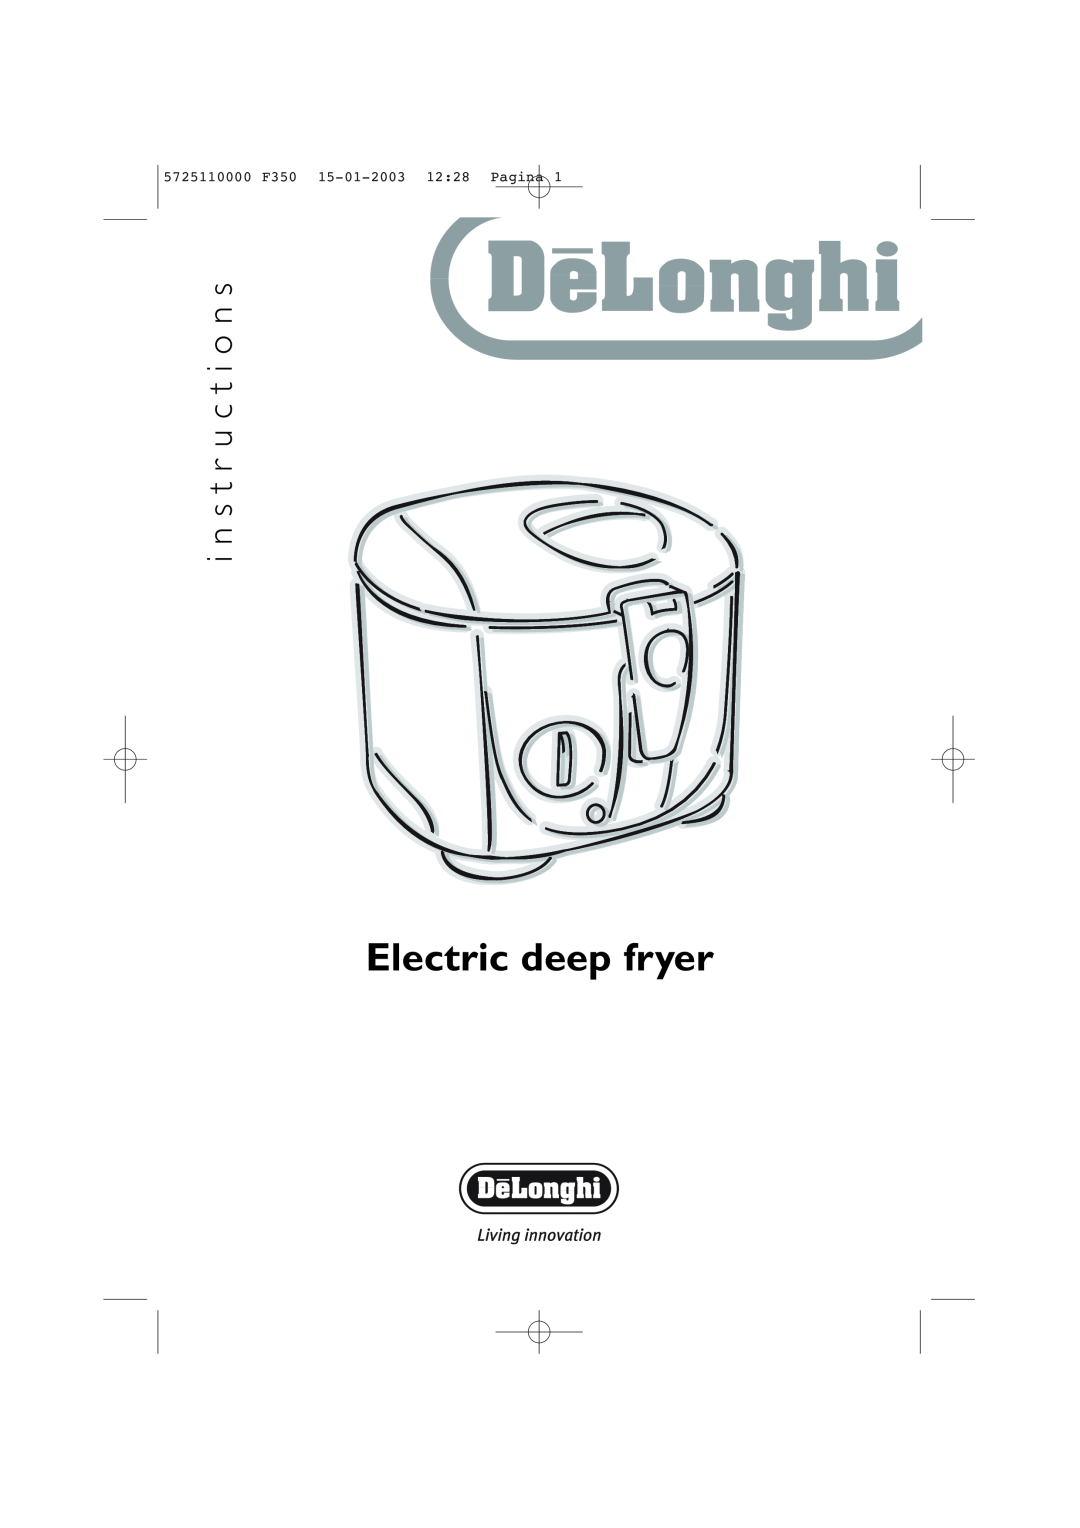 DeLonghi manual Electric deep fryer, i n s t r u c t i o n s, 5725110000 F350 15-01-2003 1228 Pagina 